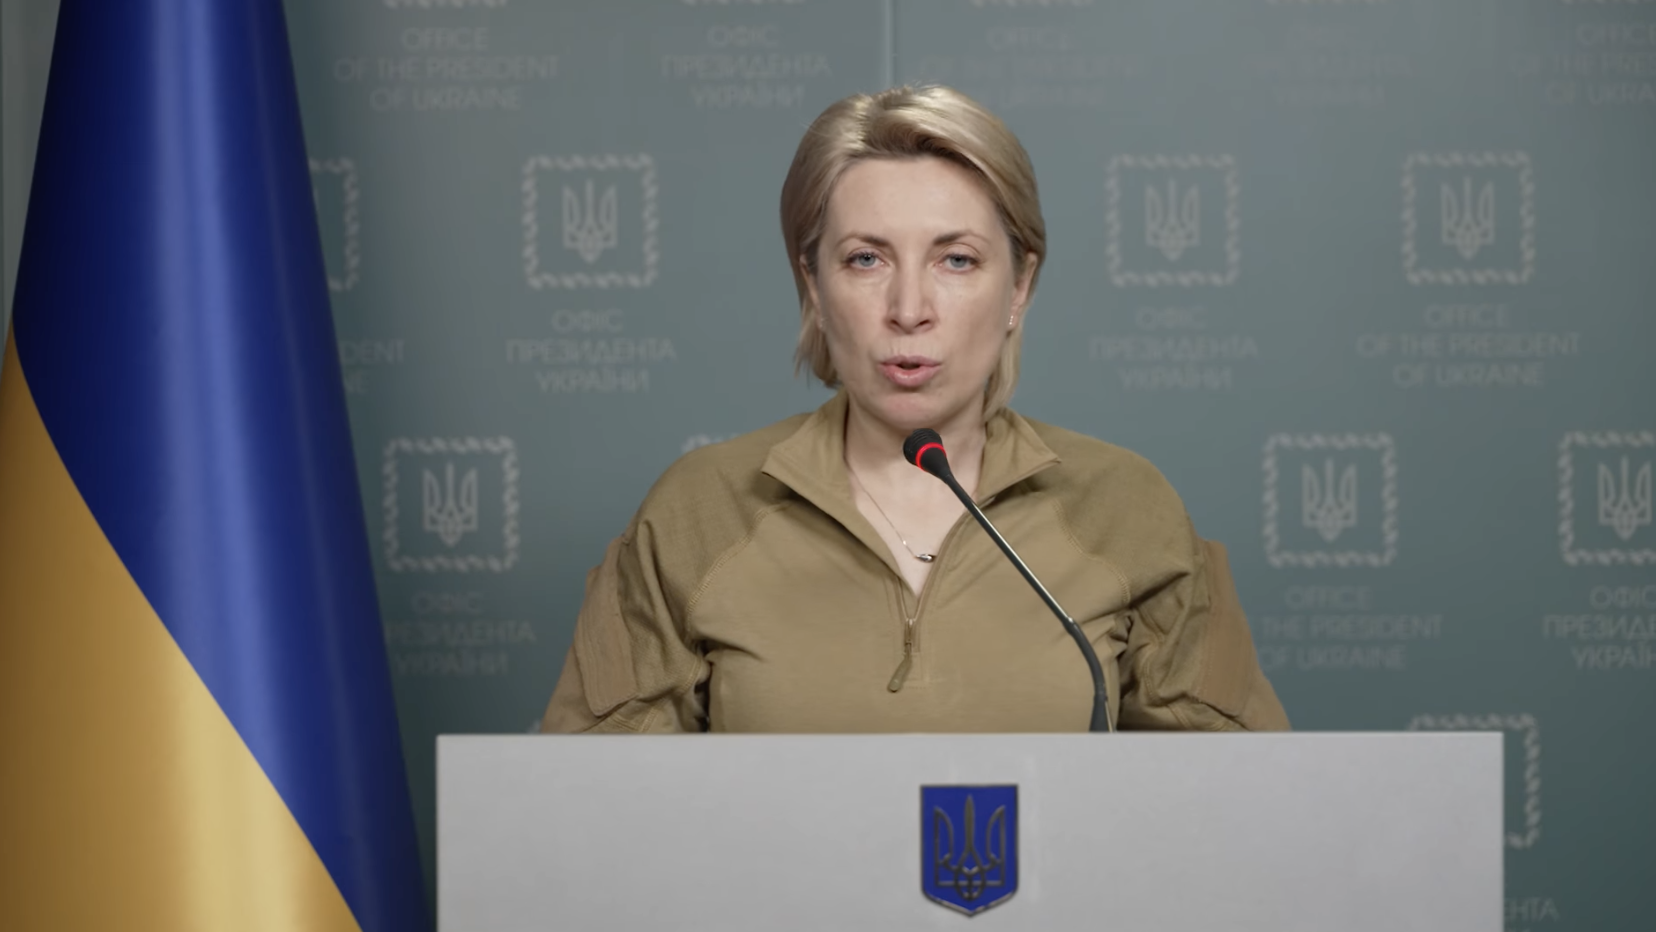 Ukraine's Deputy Prime Minister Iryna Vereshchuk speaks via a video message on social media on March 25.